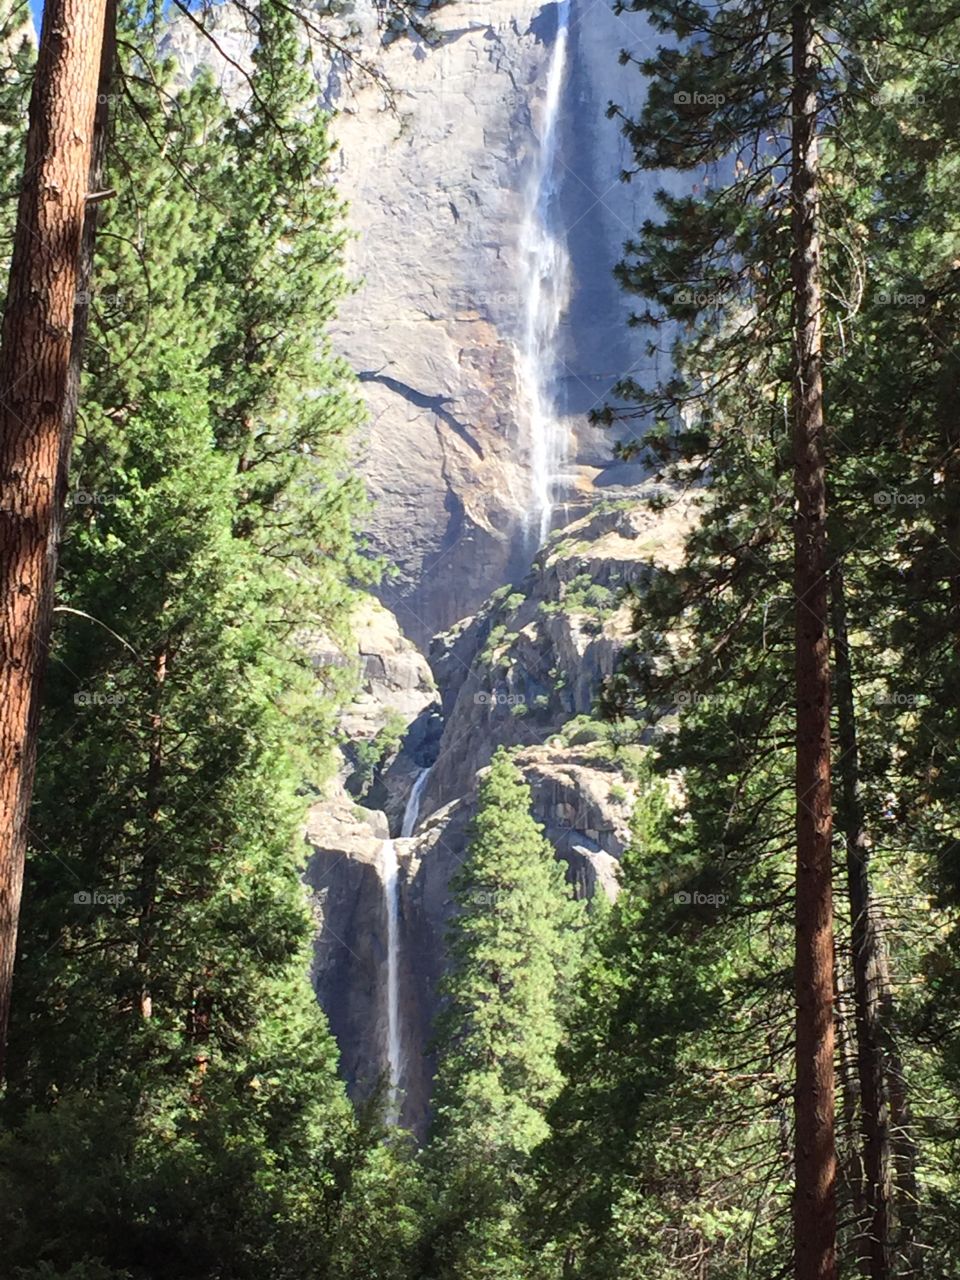 Yosemite falls. Yosemite national park 
Yosemite falls
